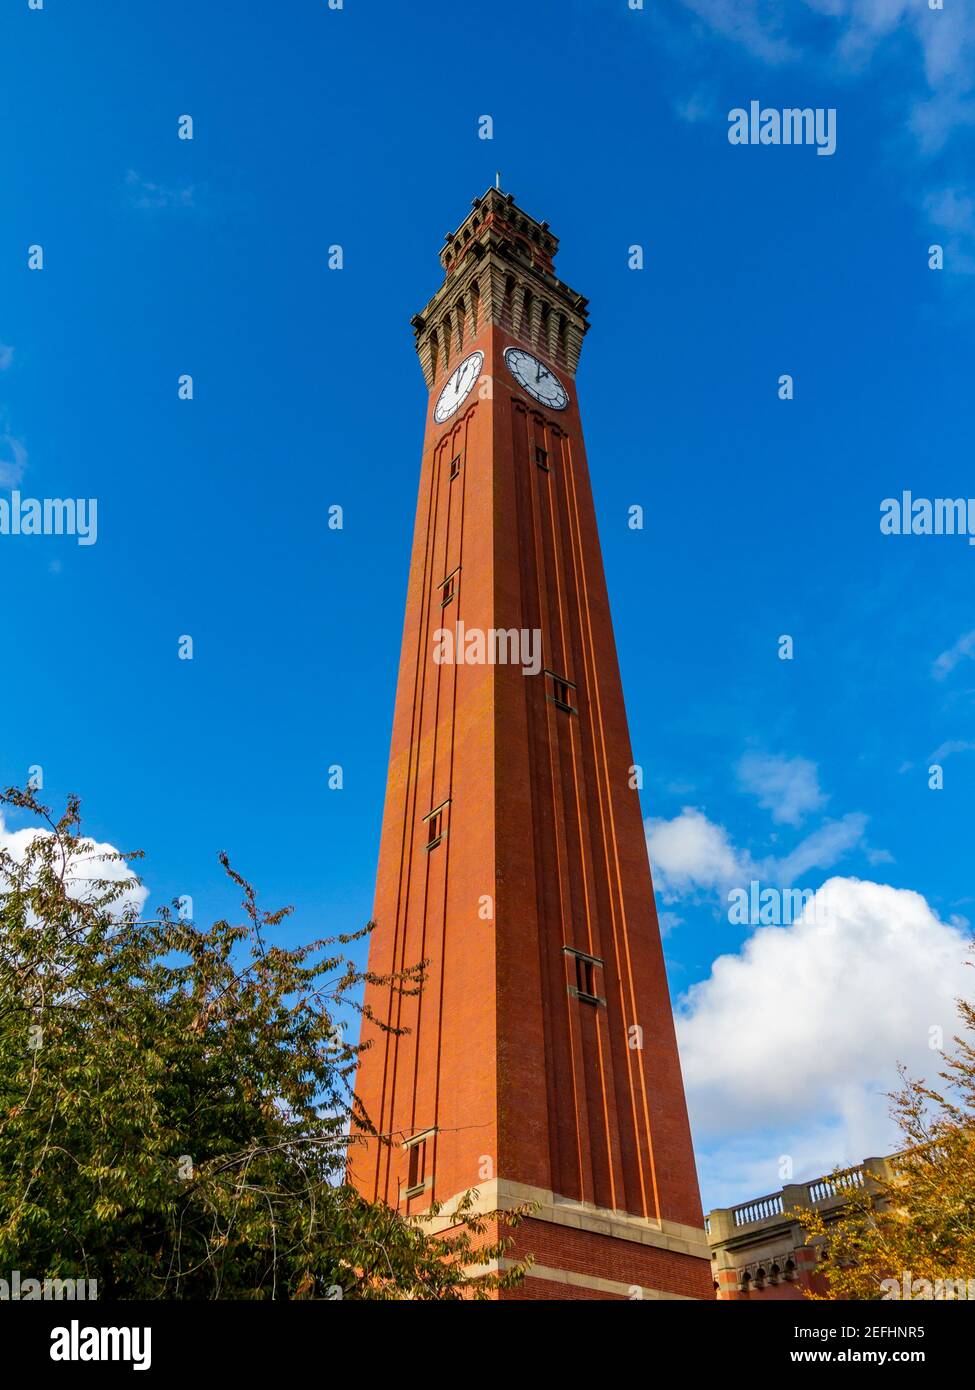 The Joseph Chamberlain Memorial Clock Tower at the University of Birmingham Edgbaston UK the tallest clock tower in the world built 1900-1908 Stock Photo